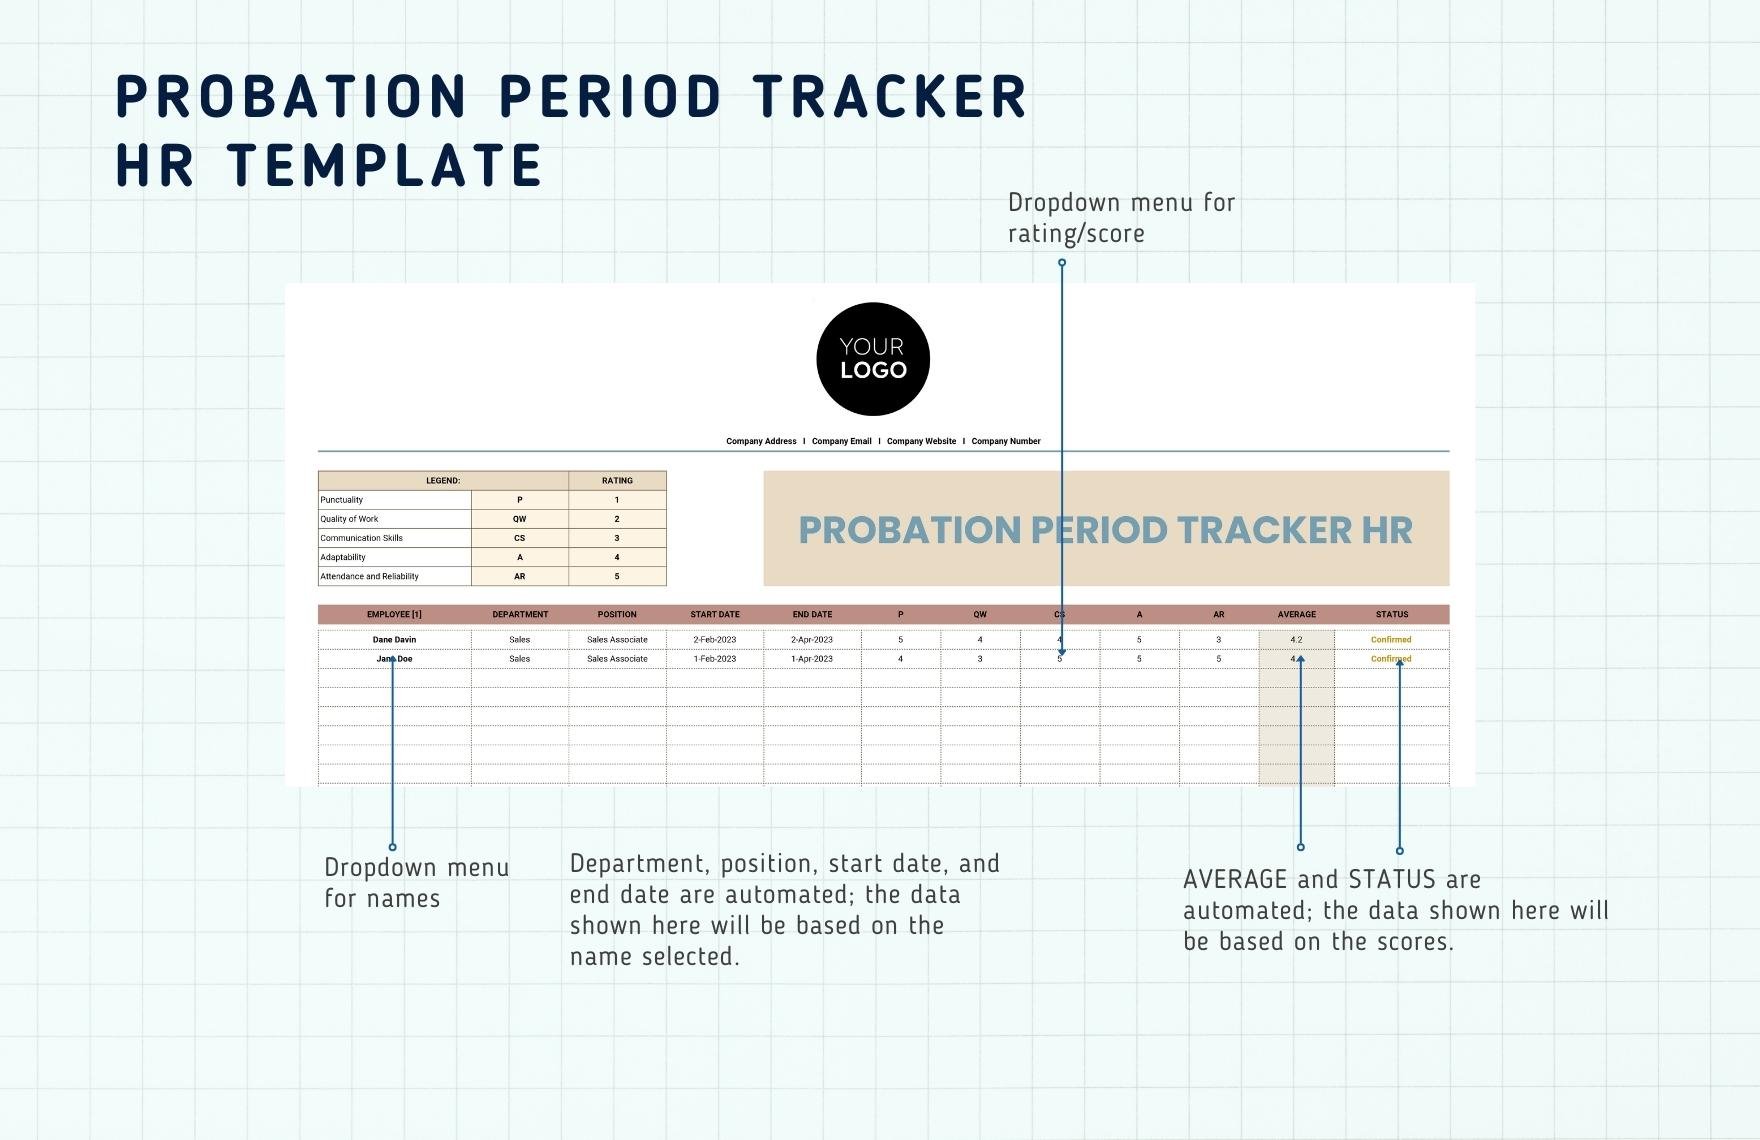 Probation Period Tracker HR Template